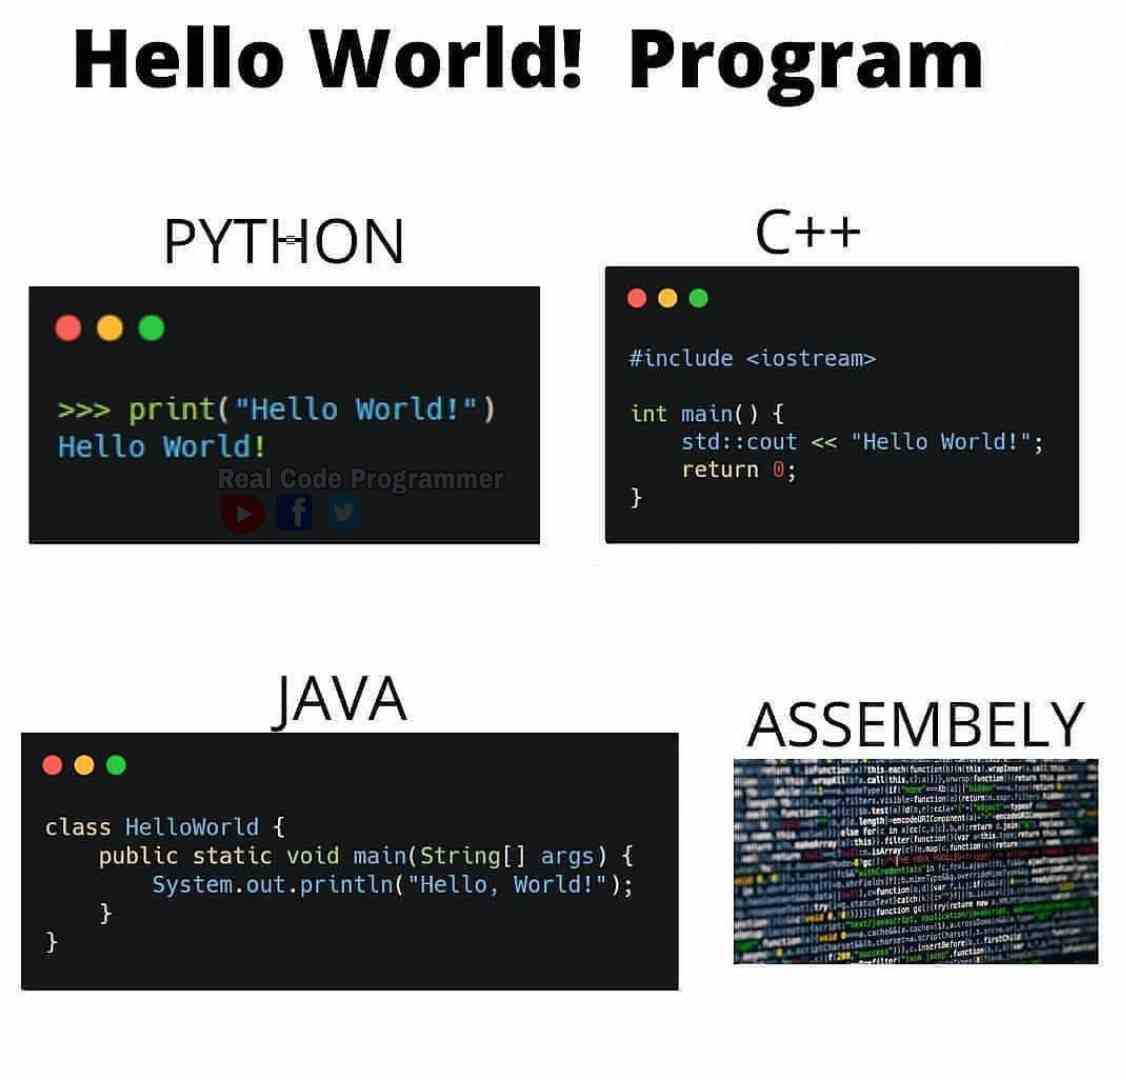 Hello World! Program